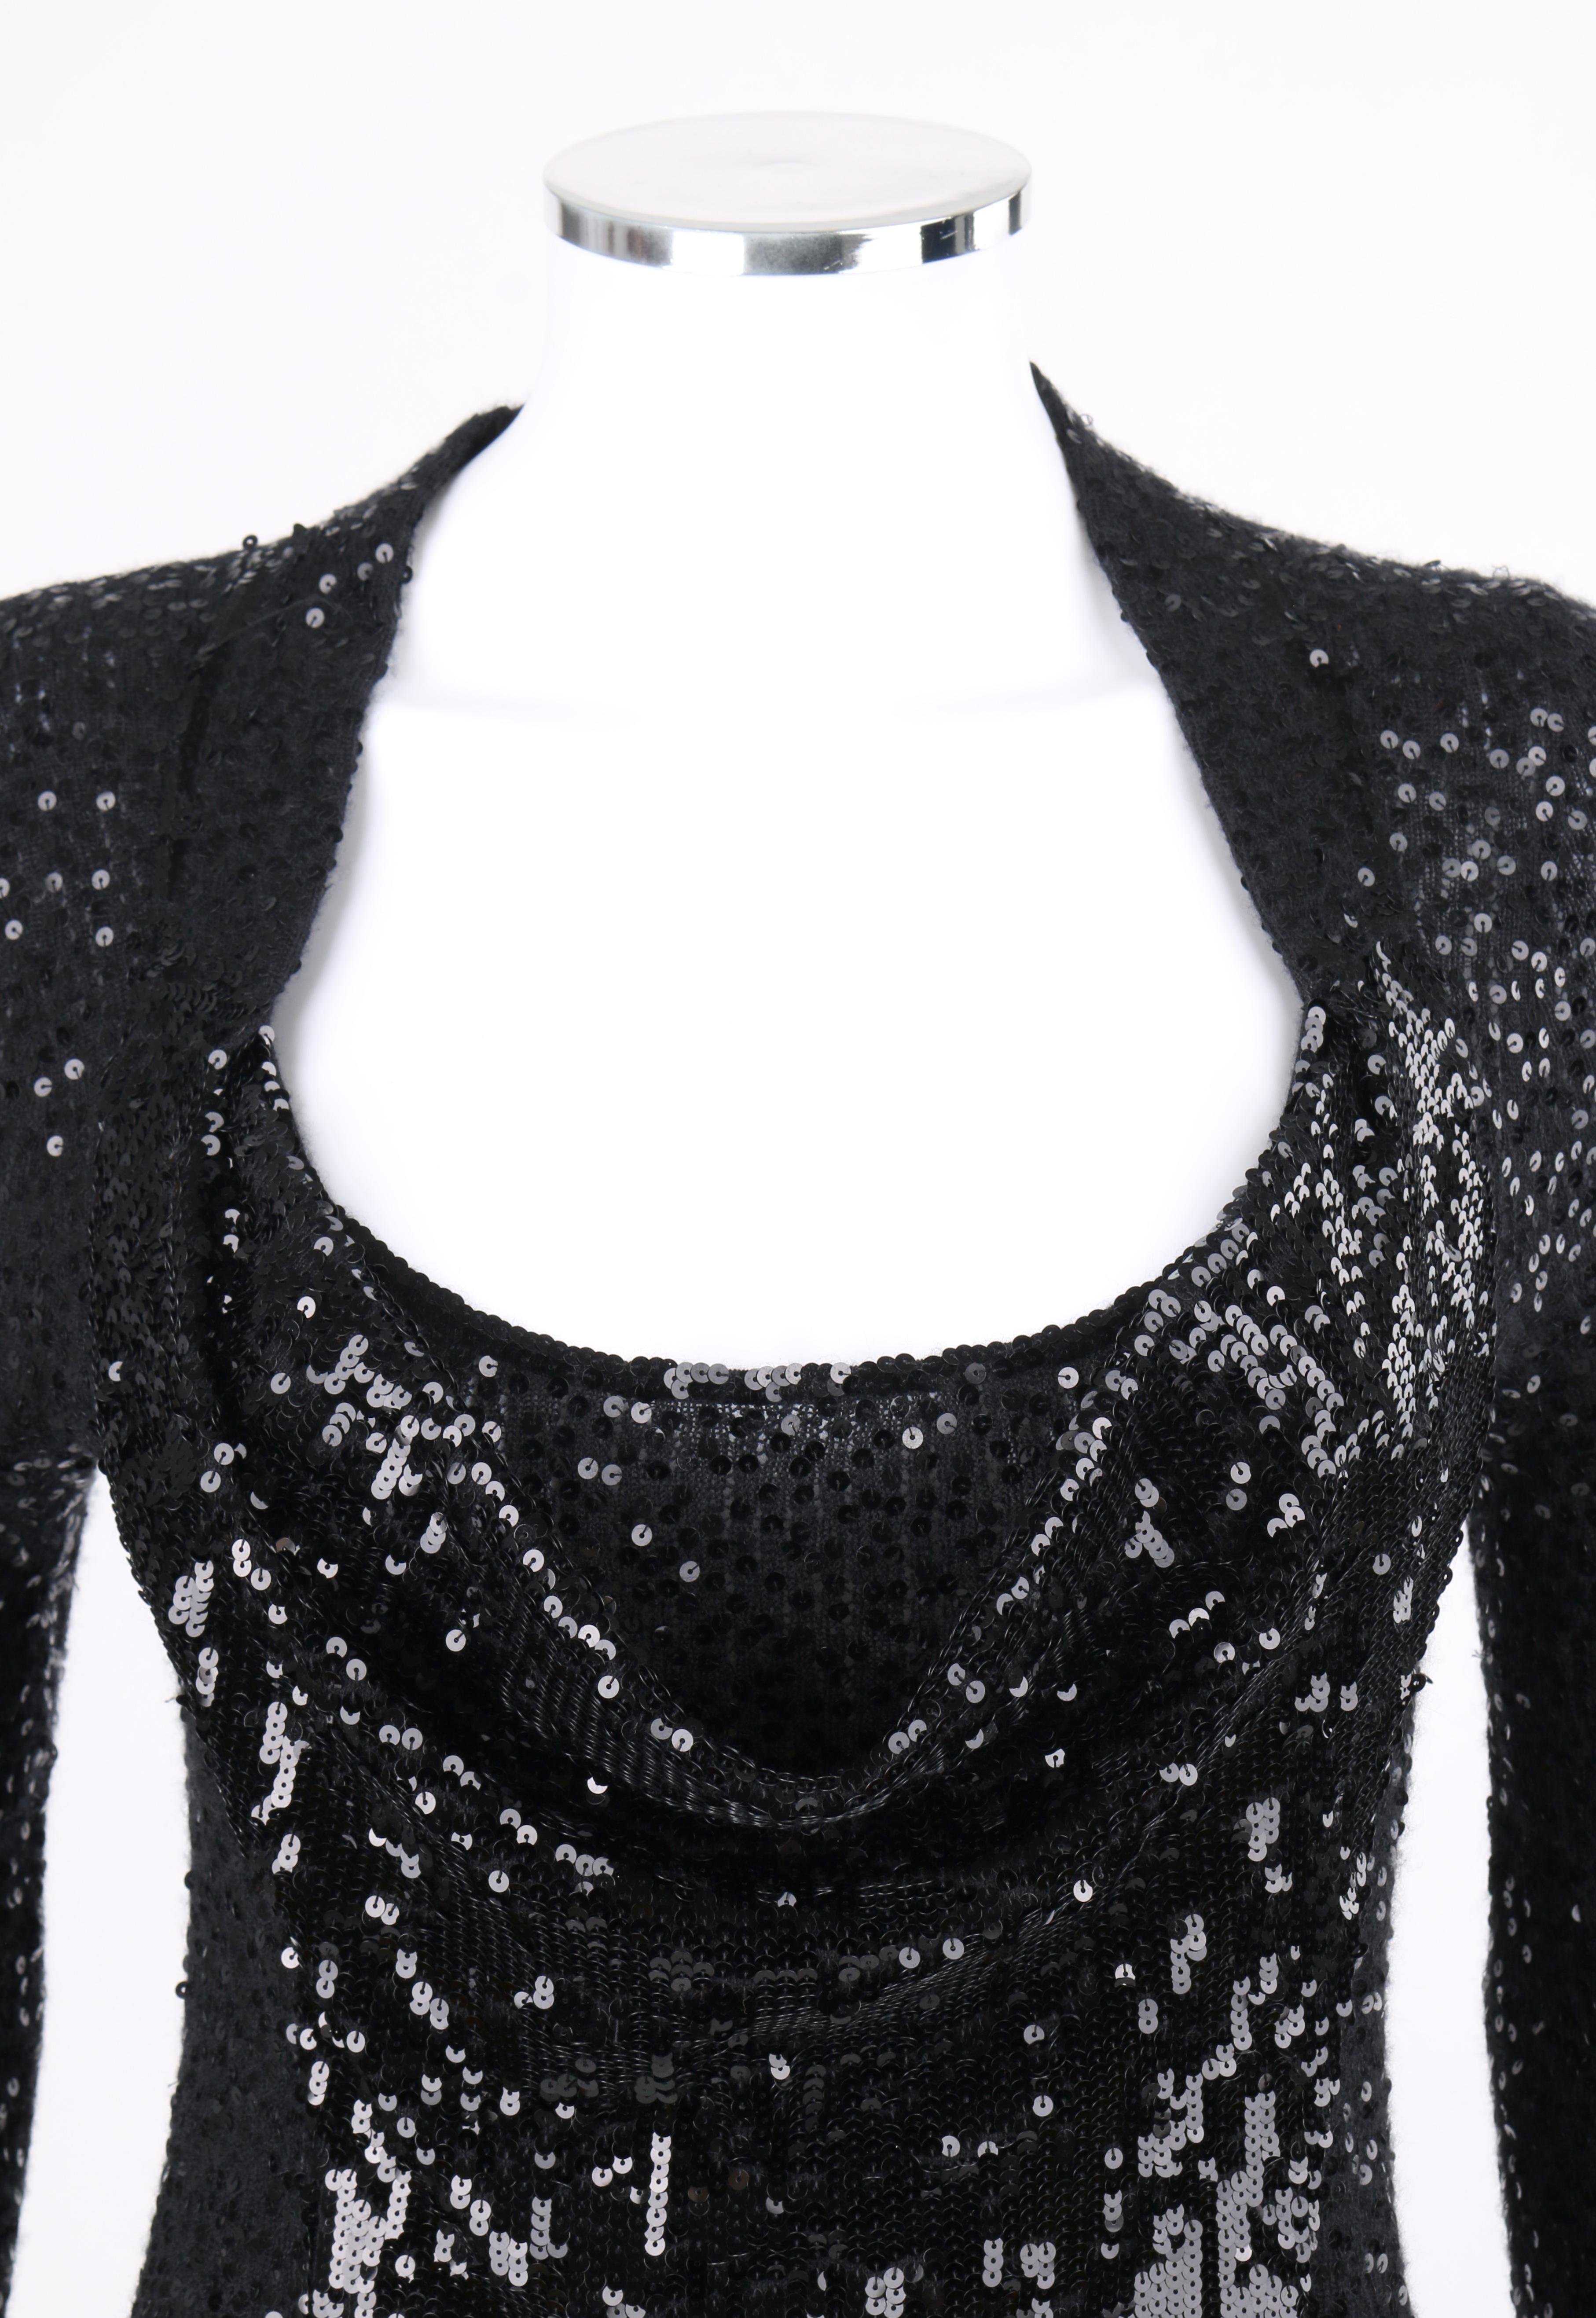 DONNA KARAN c. 1990’s Black Sequin Silk Cashmere Cowl Neck Knit Sweater Top

Brand / Manufacturer: Donna Karan
Circa: 1990’s
Designer: Donna Karan
Style: Long sleeve top
Color(s): Black
Lined: No
Marked Fabric Content: “70% Cashmere, 30%